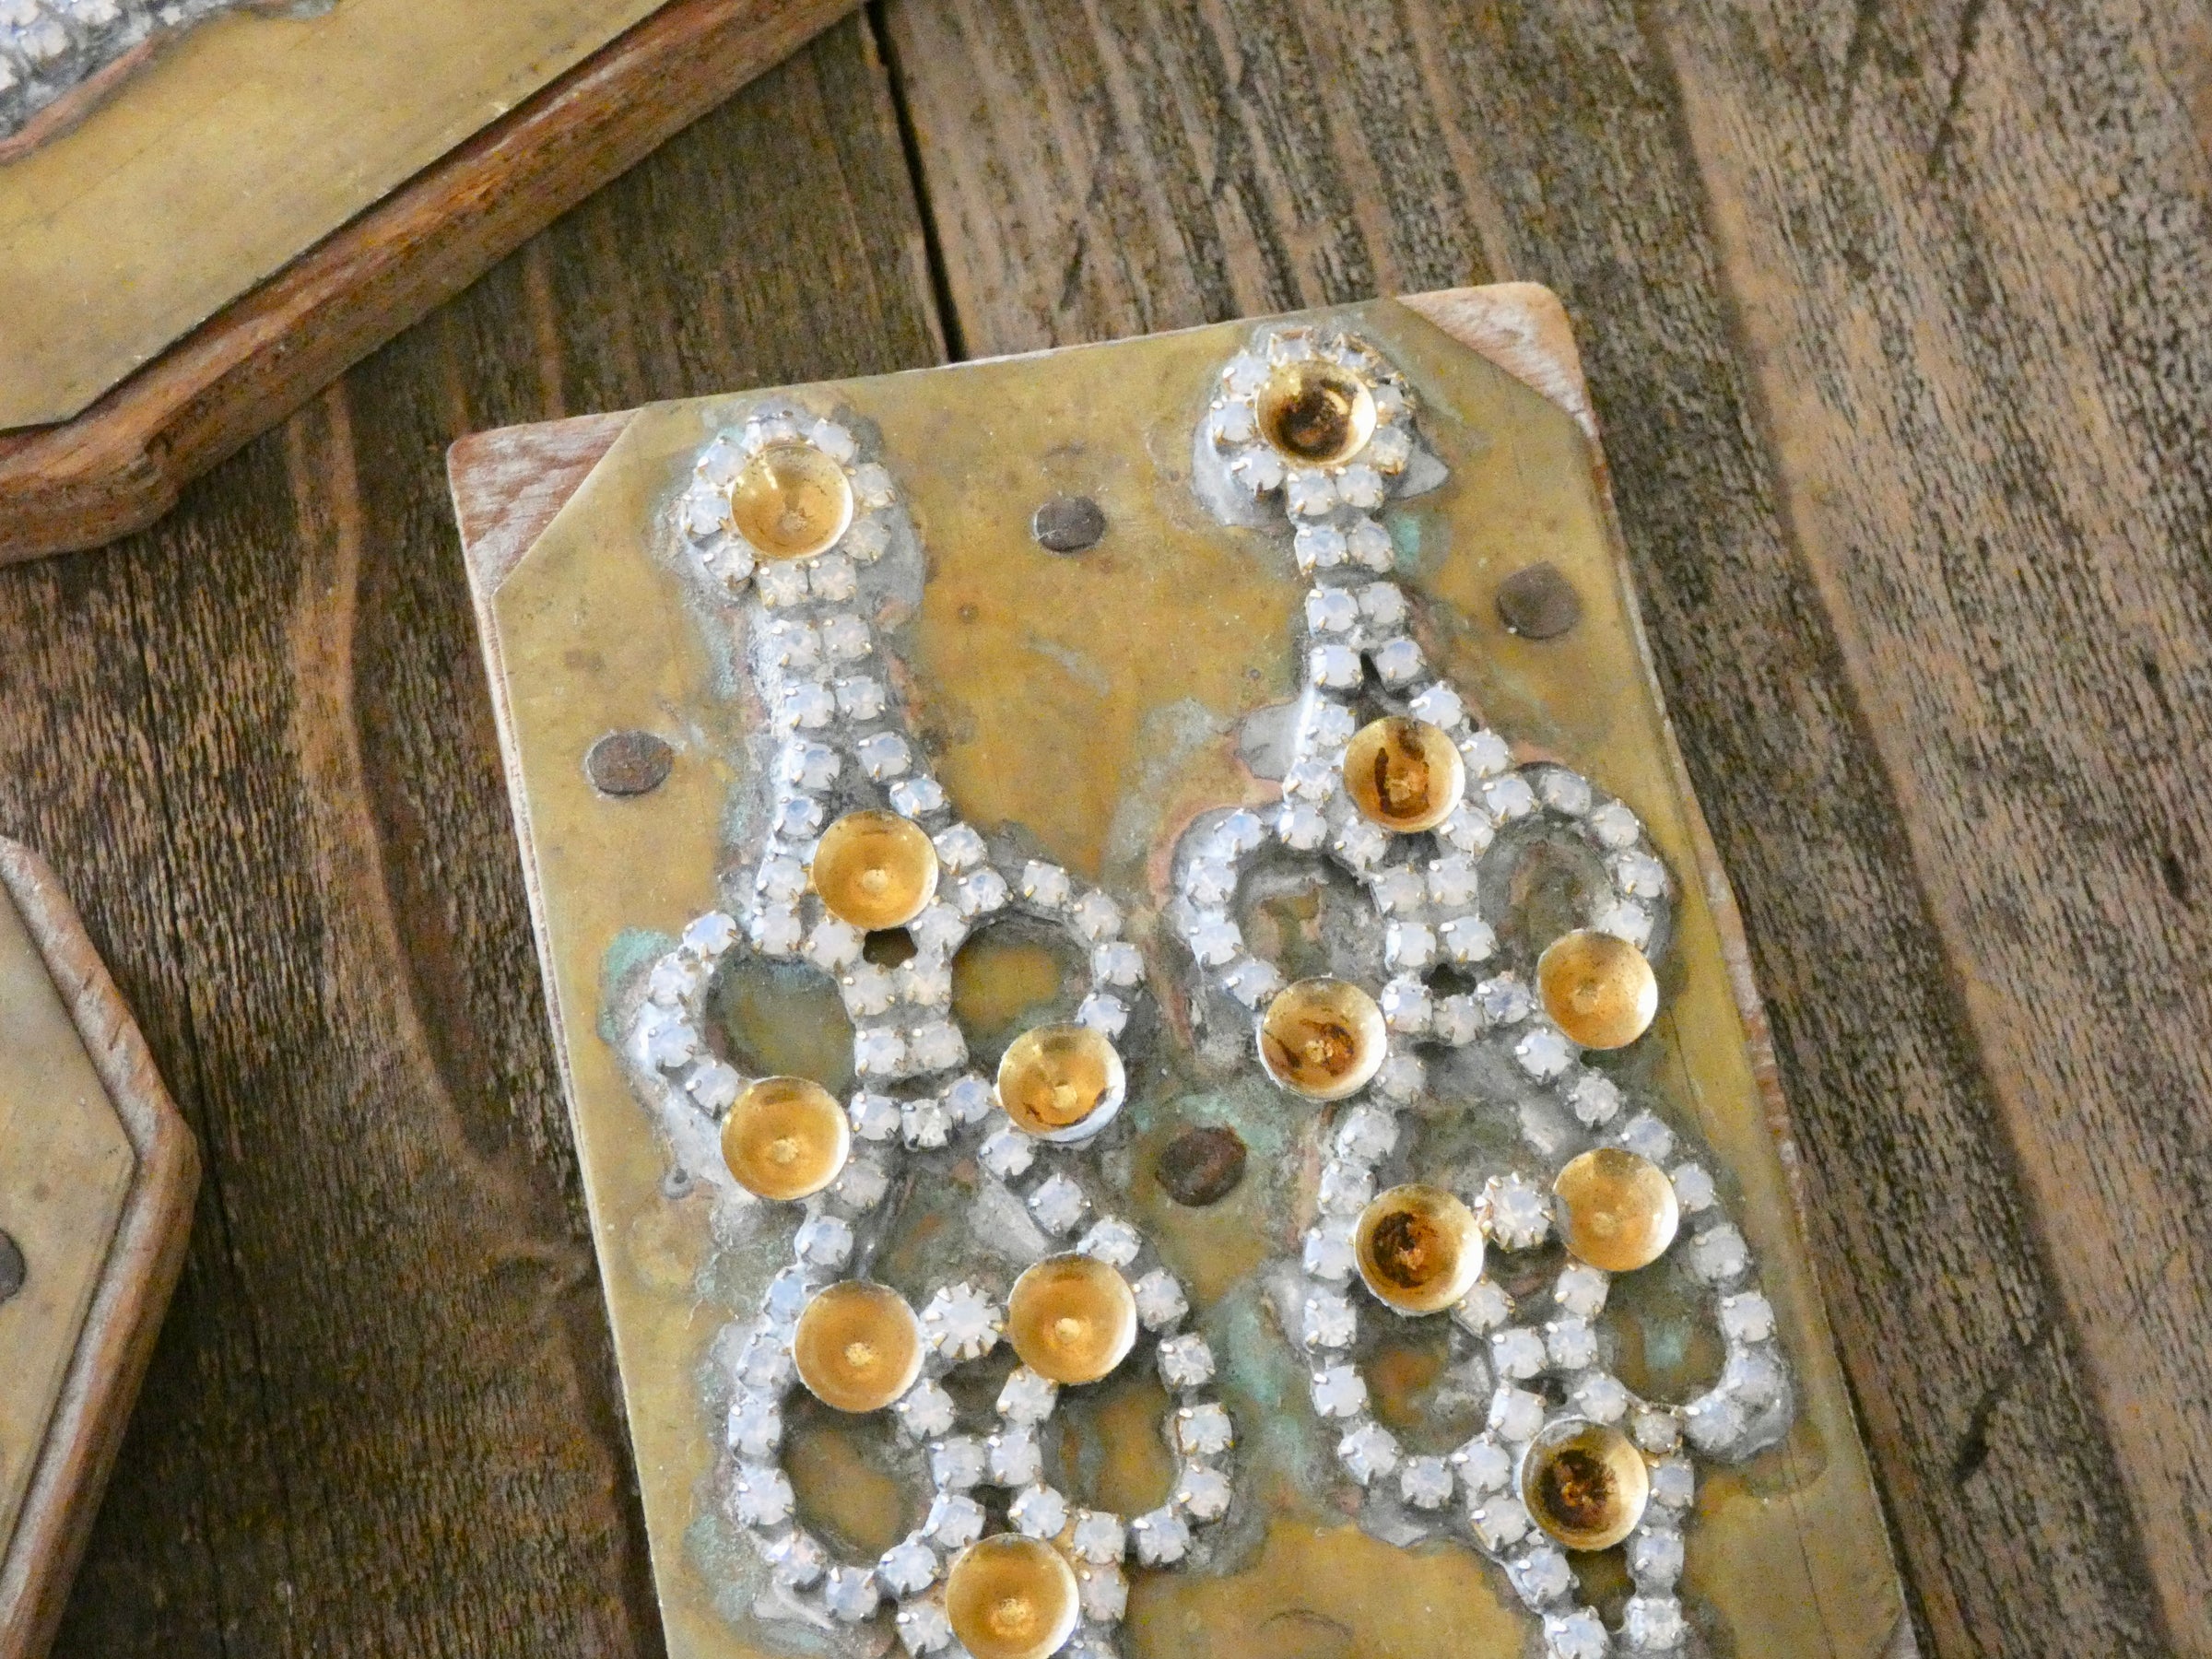 Vintage Decor, One of a Kind Rare Found Object, Rhinestone jewelry pieces